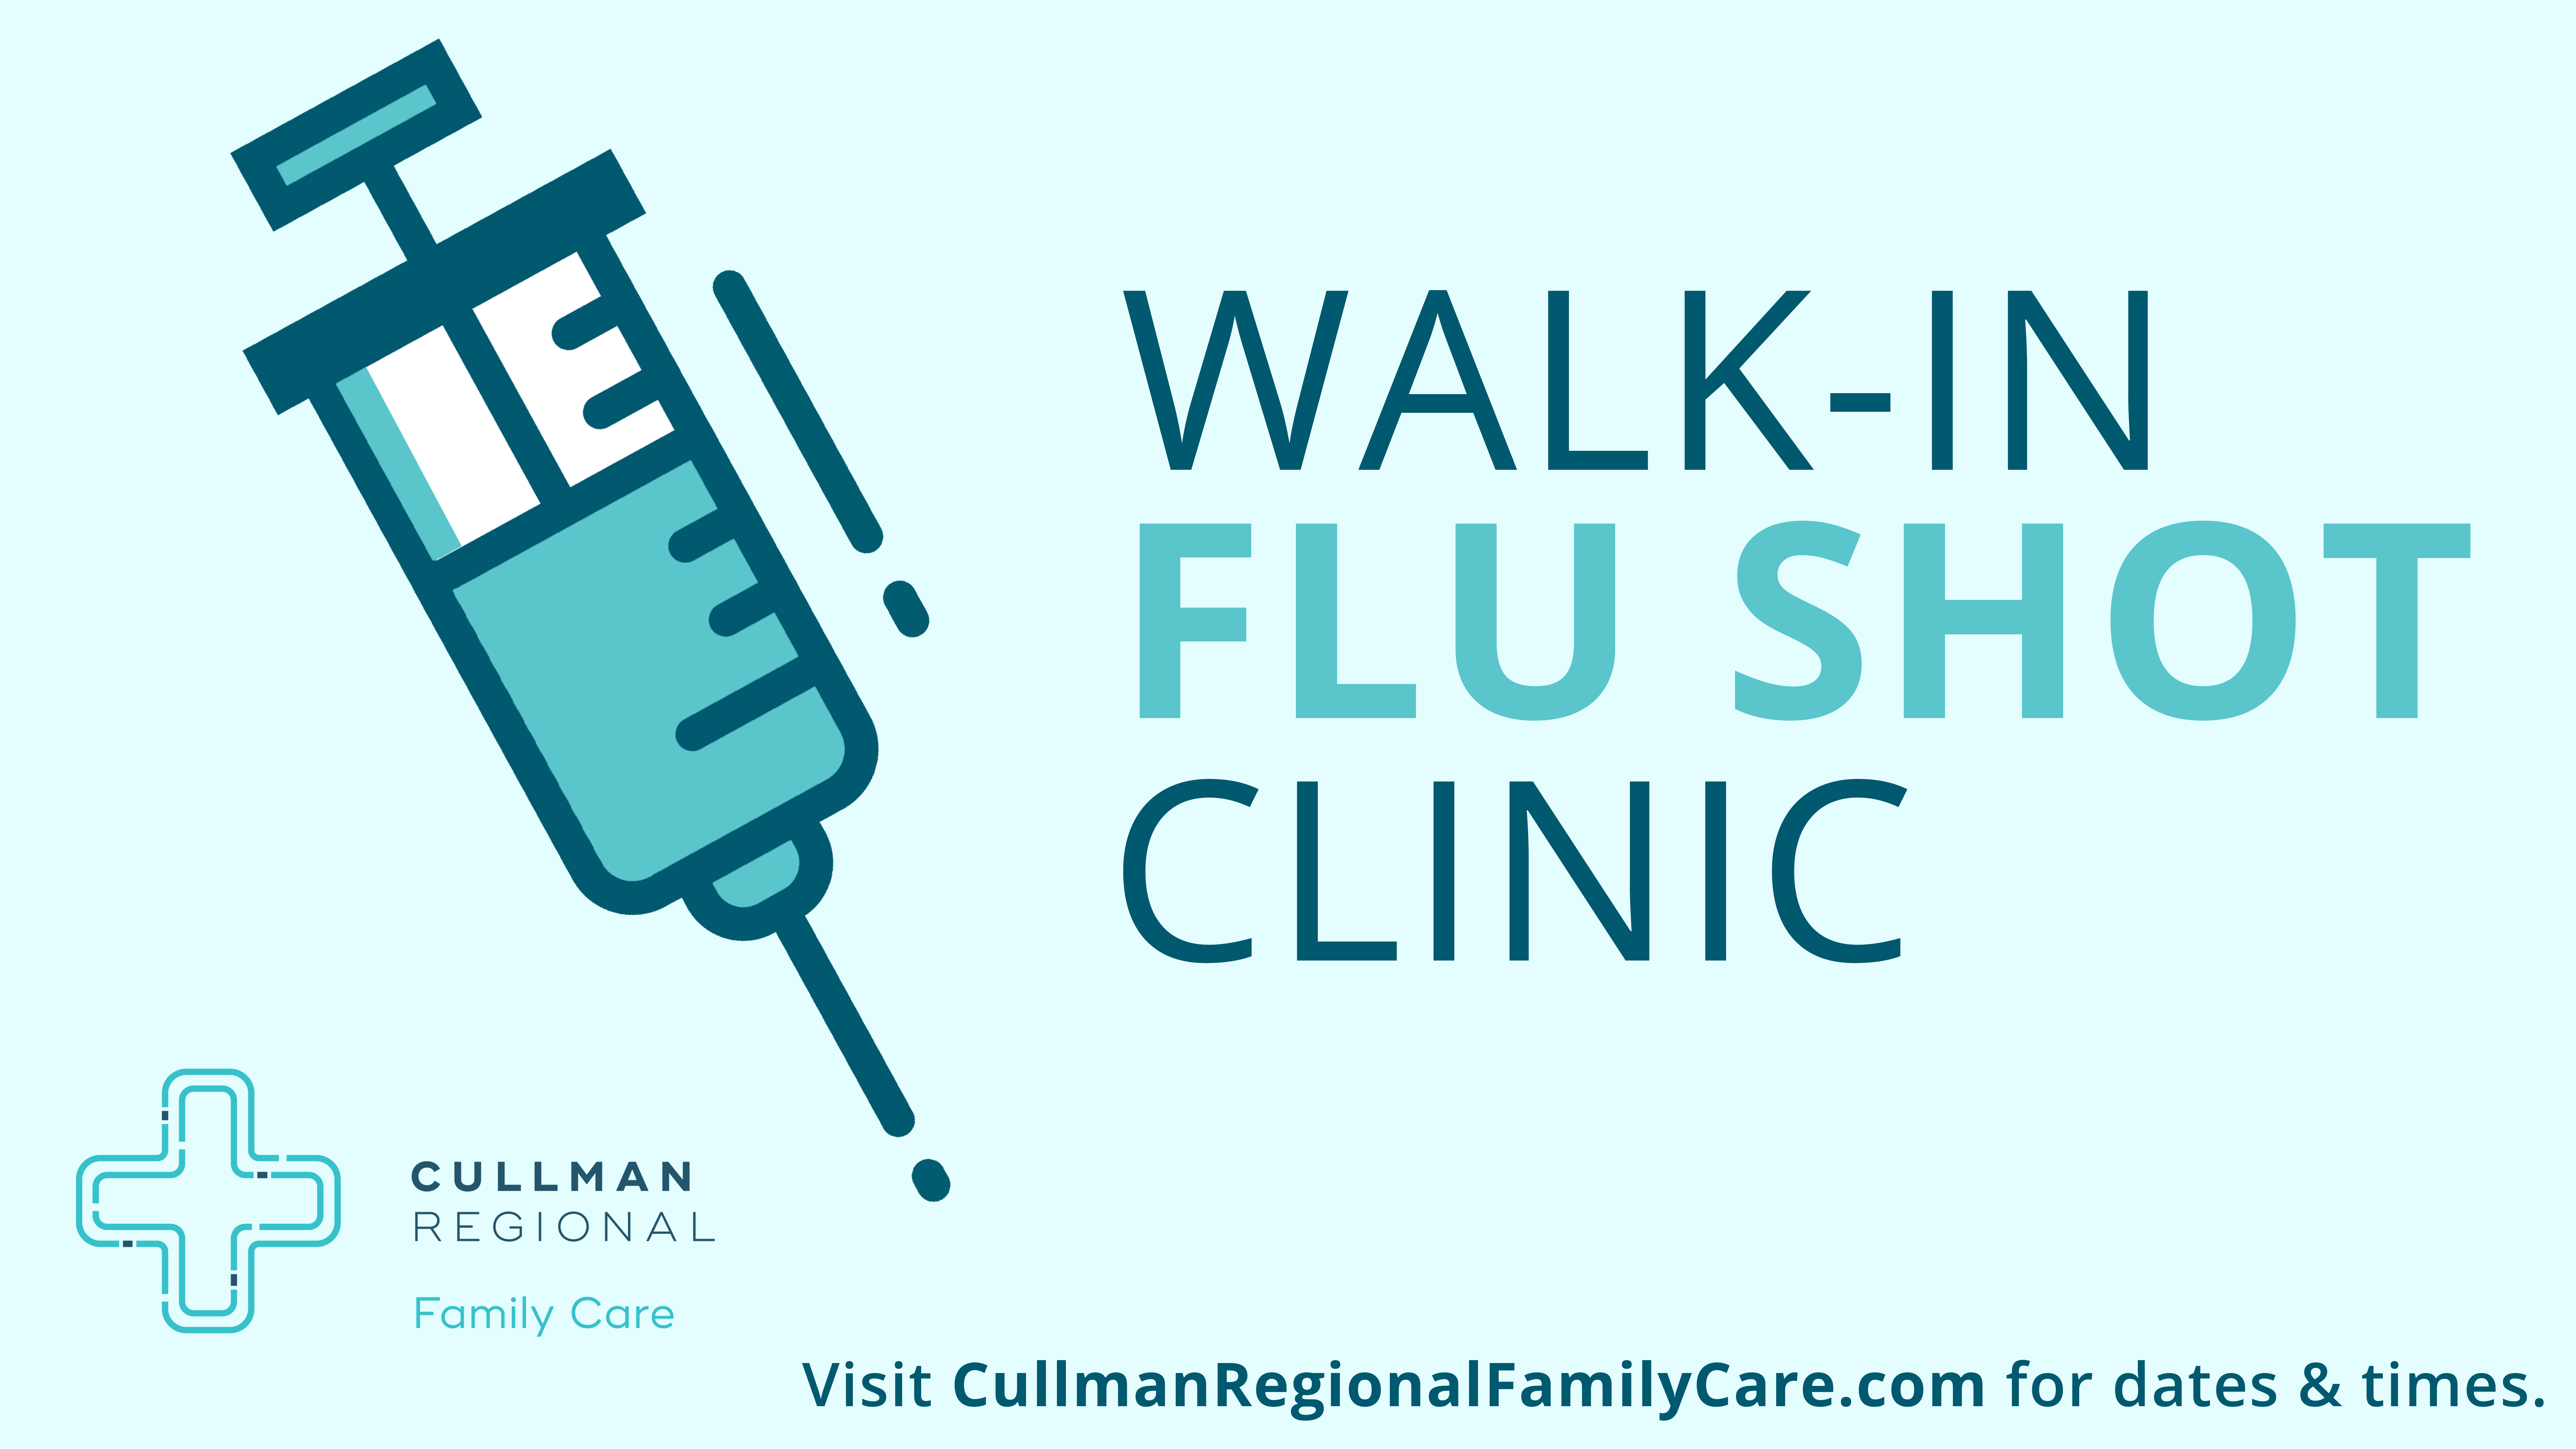 walk-in_flu_shot_clinic.jpg